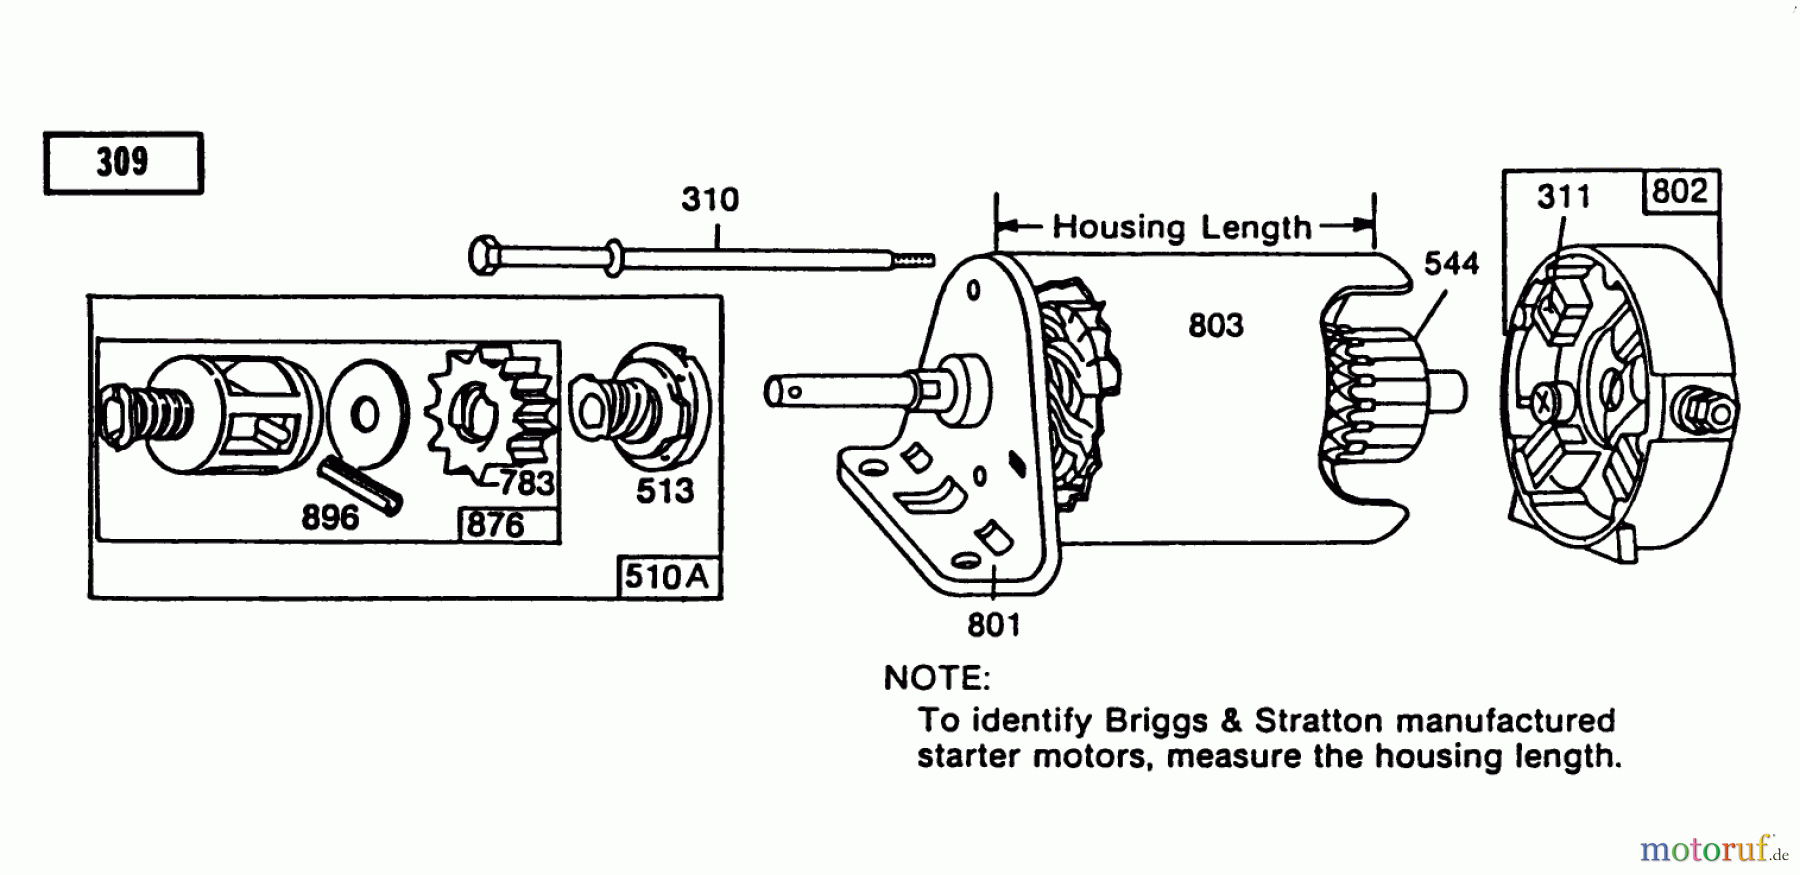  Toro Neu Accessories, Mower 59111 - Toro Easy Empty Grass Catcher, 1988 (8000001-8999999) ENGINE BRIGGS & STRATTON MODEL NO. 191707-2161-01 8 H.P. REAR ENGINE RIDER RECOIL MODEL 56145 #3